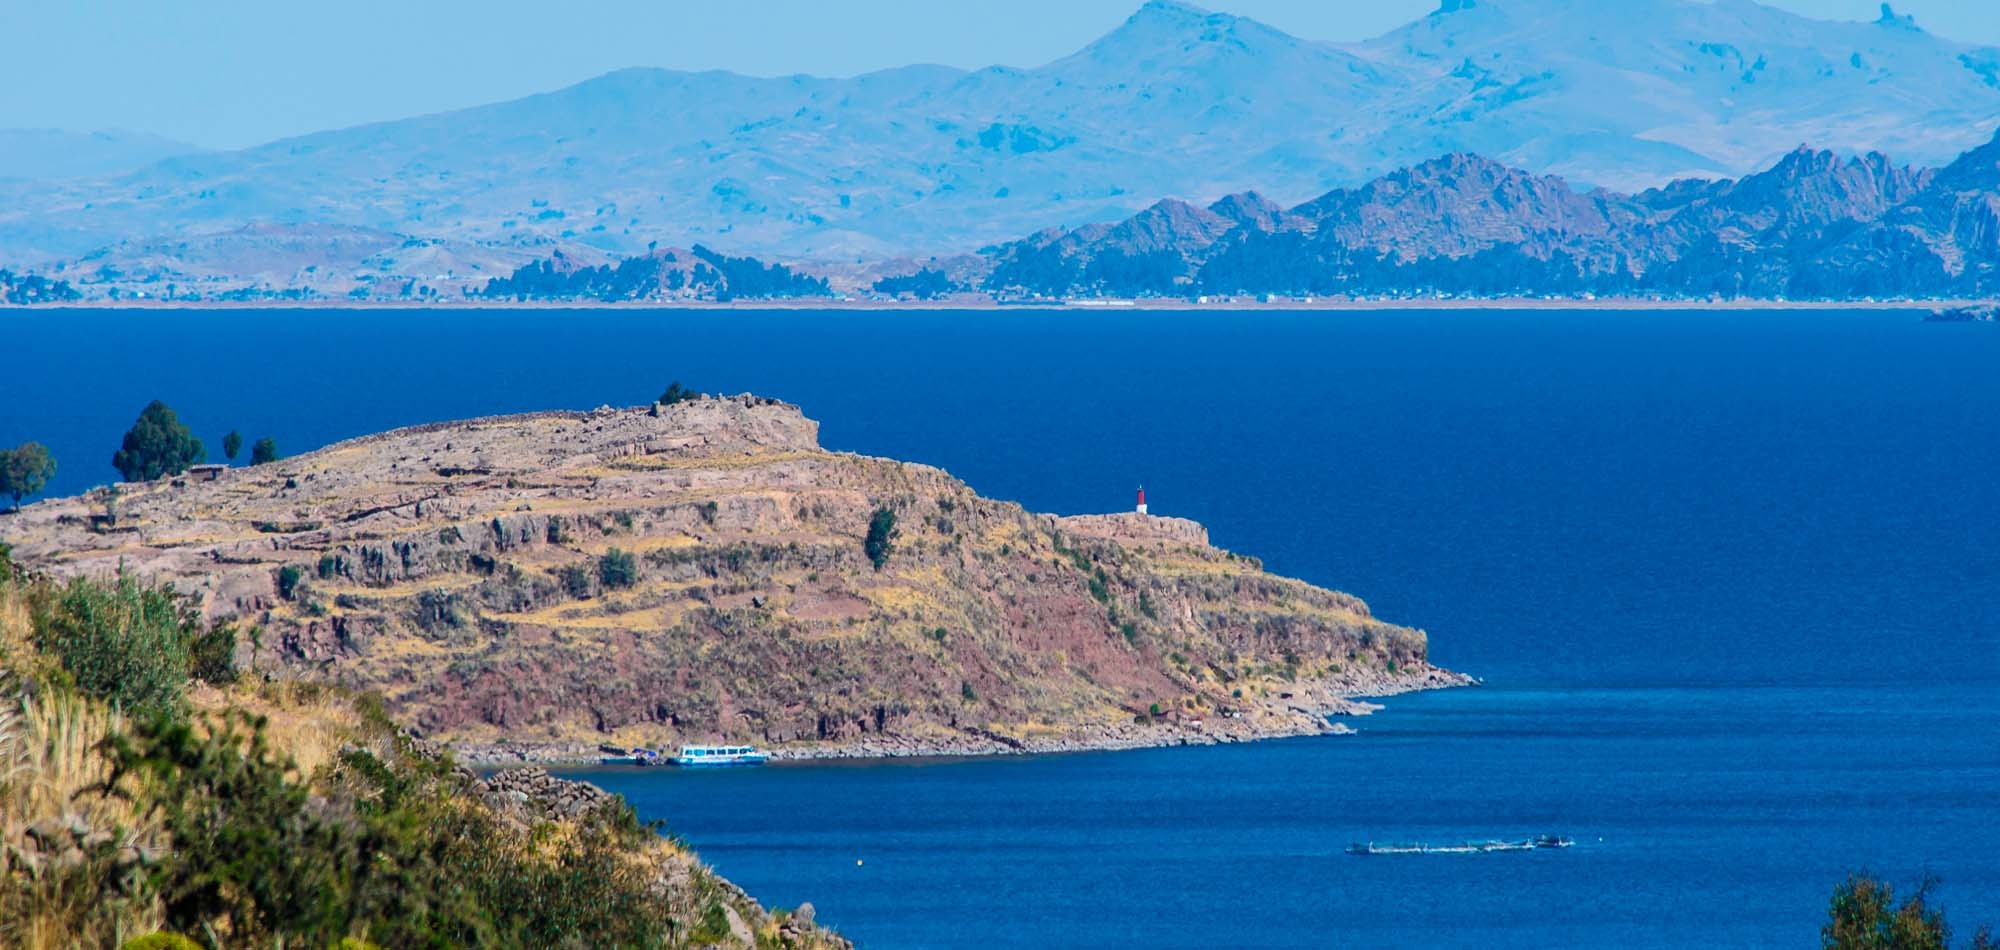 Titicaca Lake and Puno - Worth Visiting?